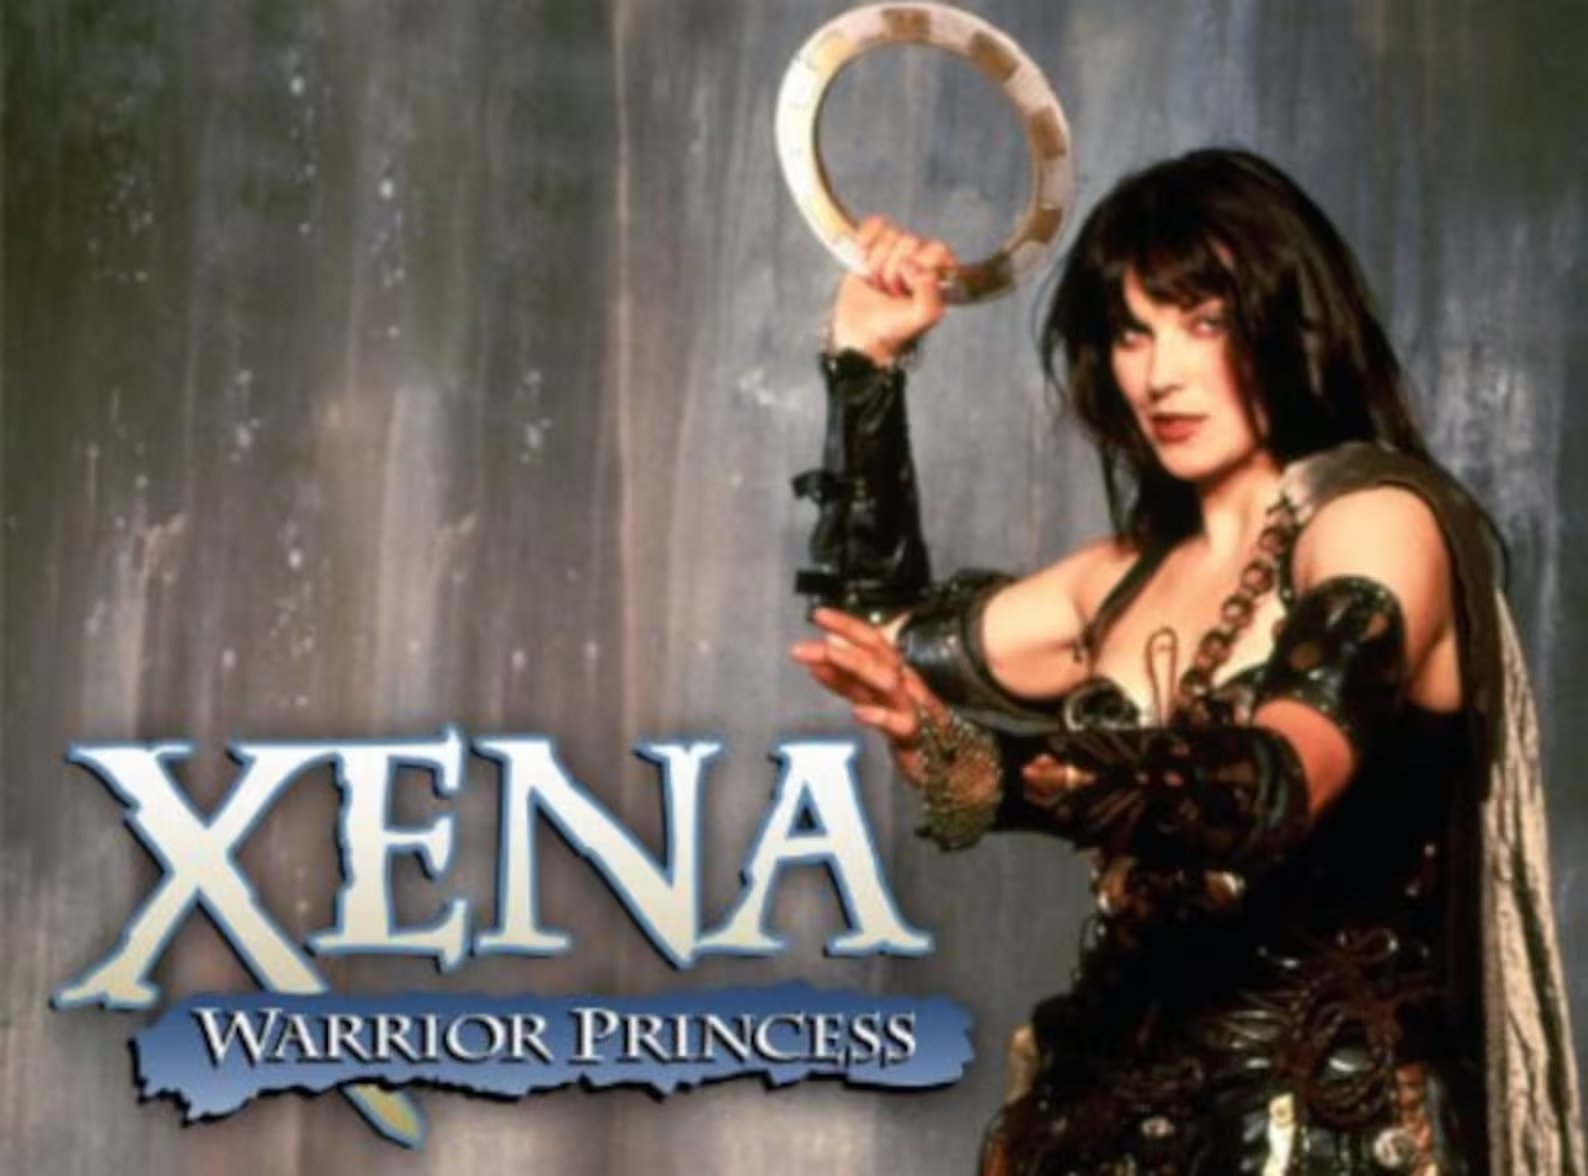 Xena Warrior Princess Complete Series - USB Flash Drive - All 6 Seasons 134 Episodes - Turkish TV Series